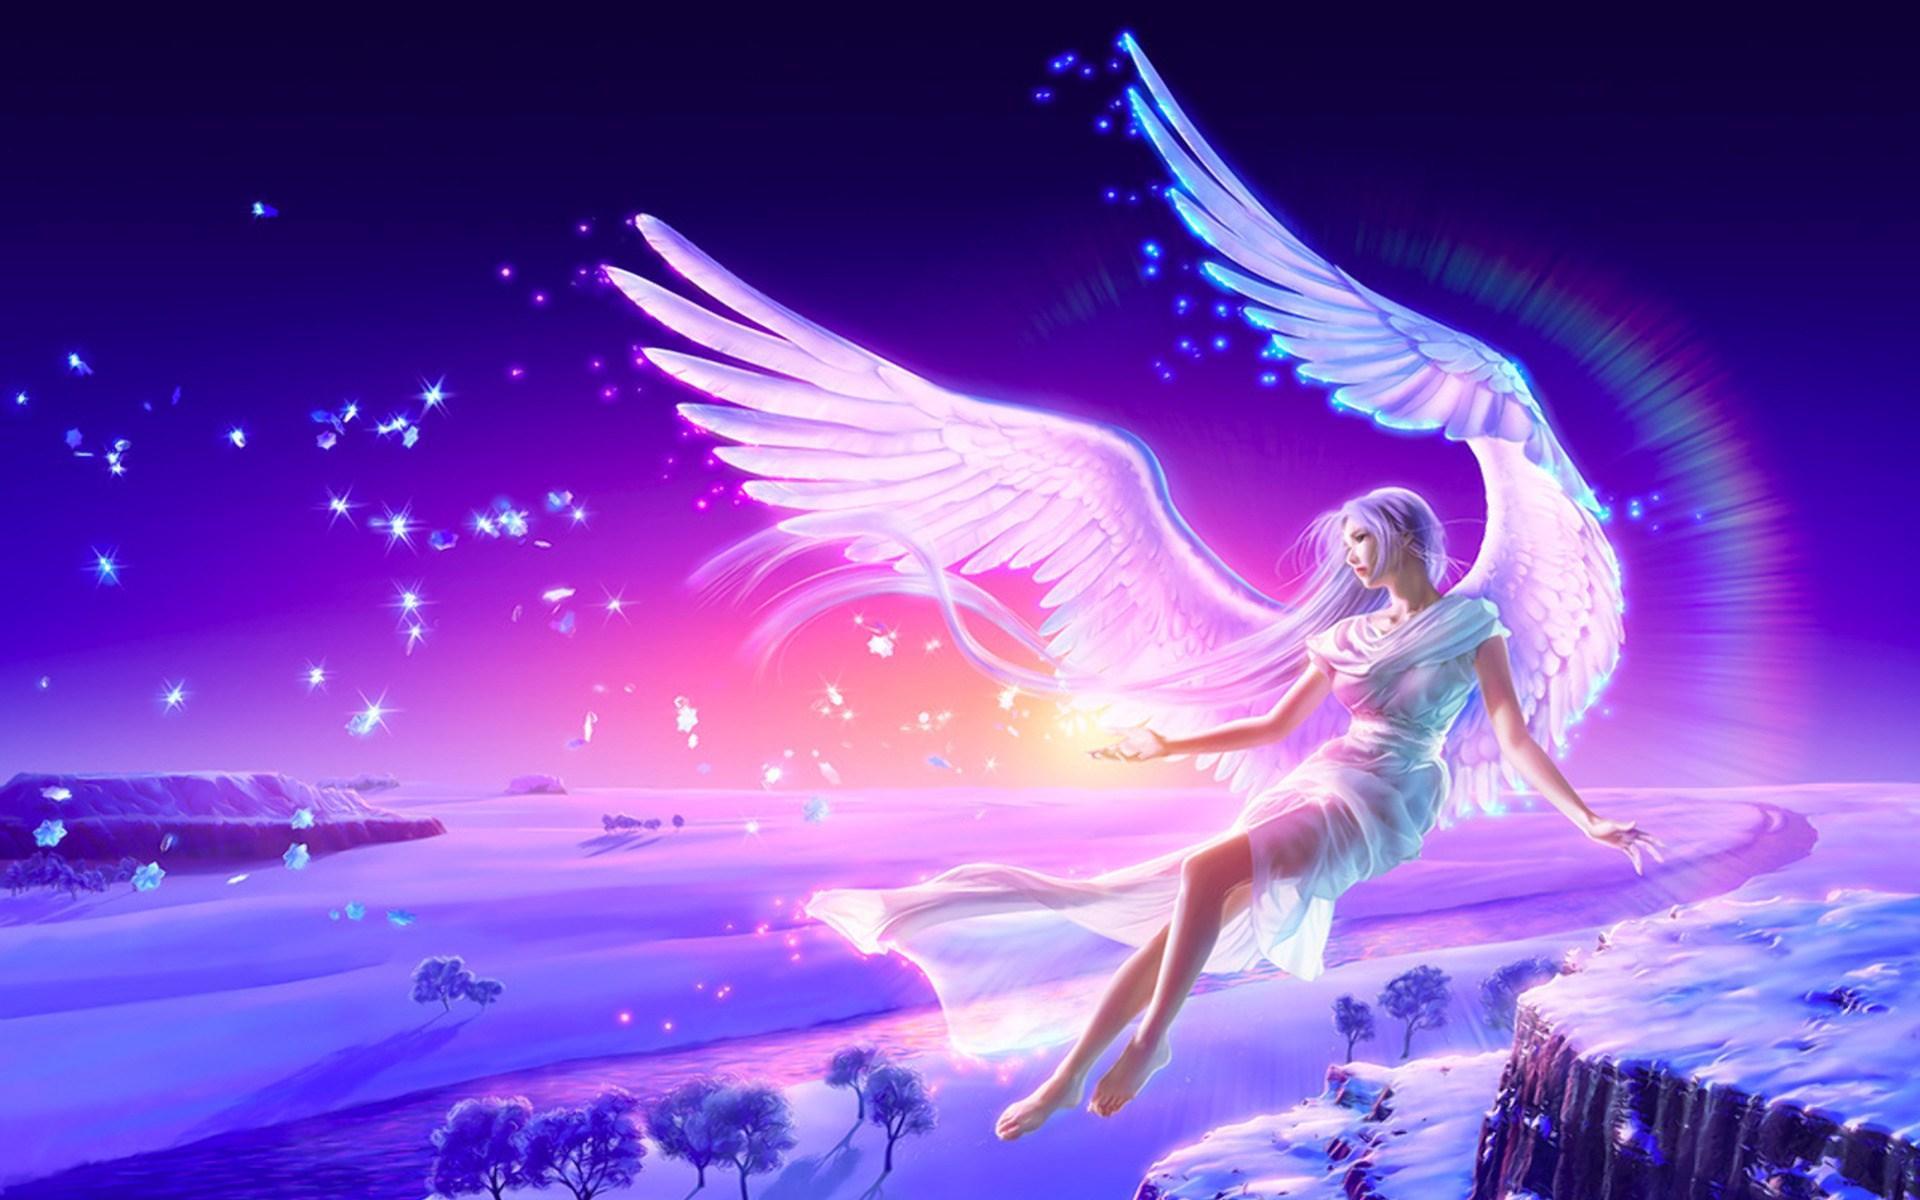 imagen angel-blonde-girl-anime-wings-flying-winter-snow.jpg  by Sekai